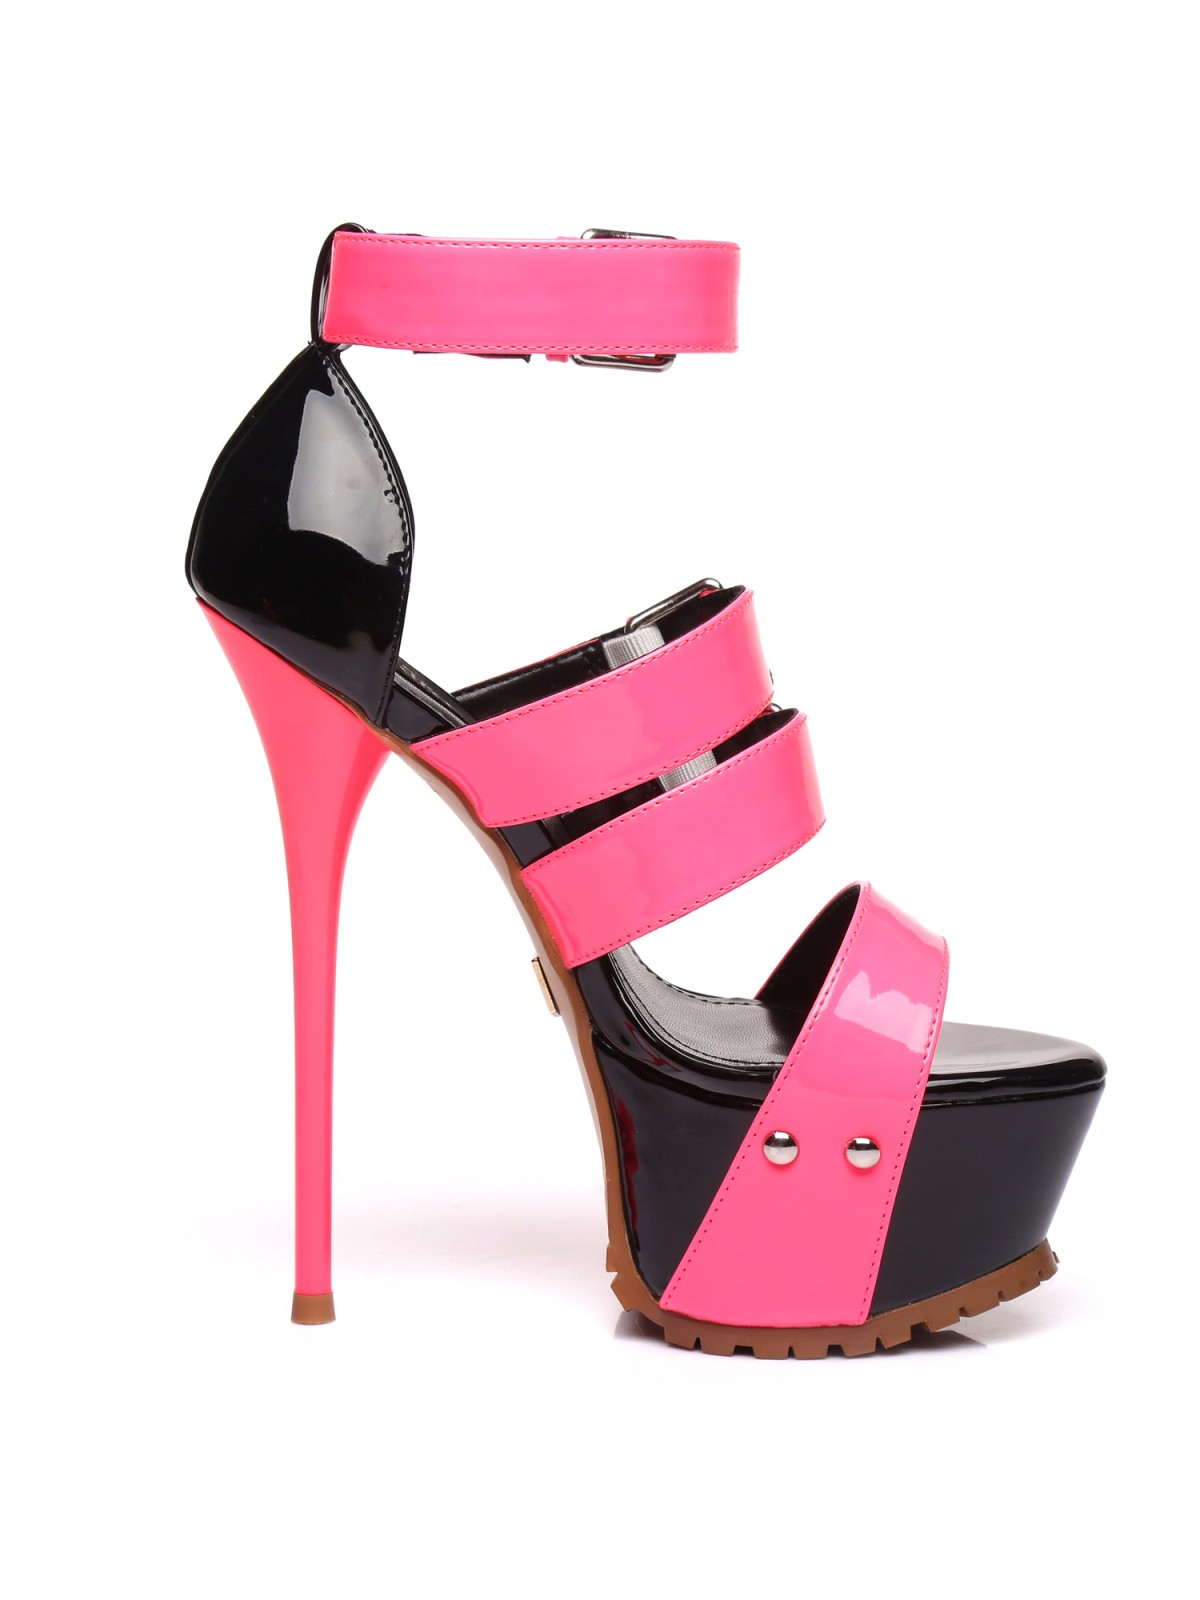 shiny black straps SIENNA pink Giaro platform sandals with